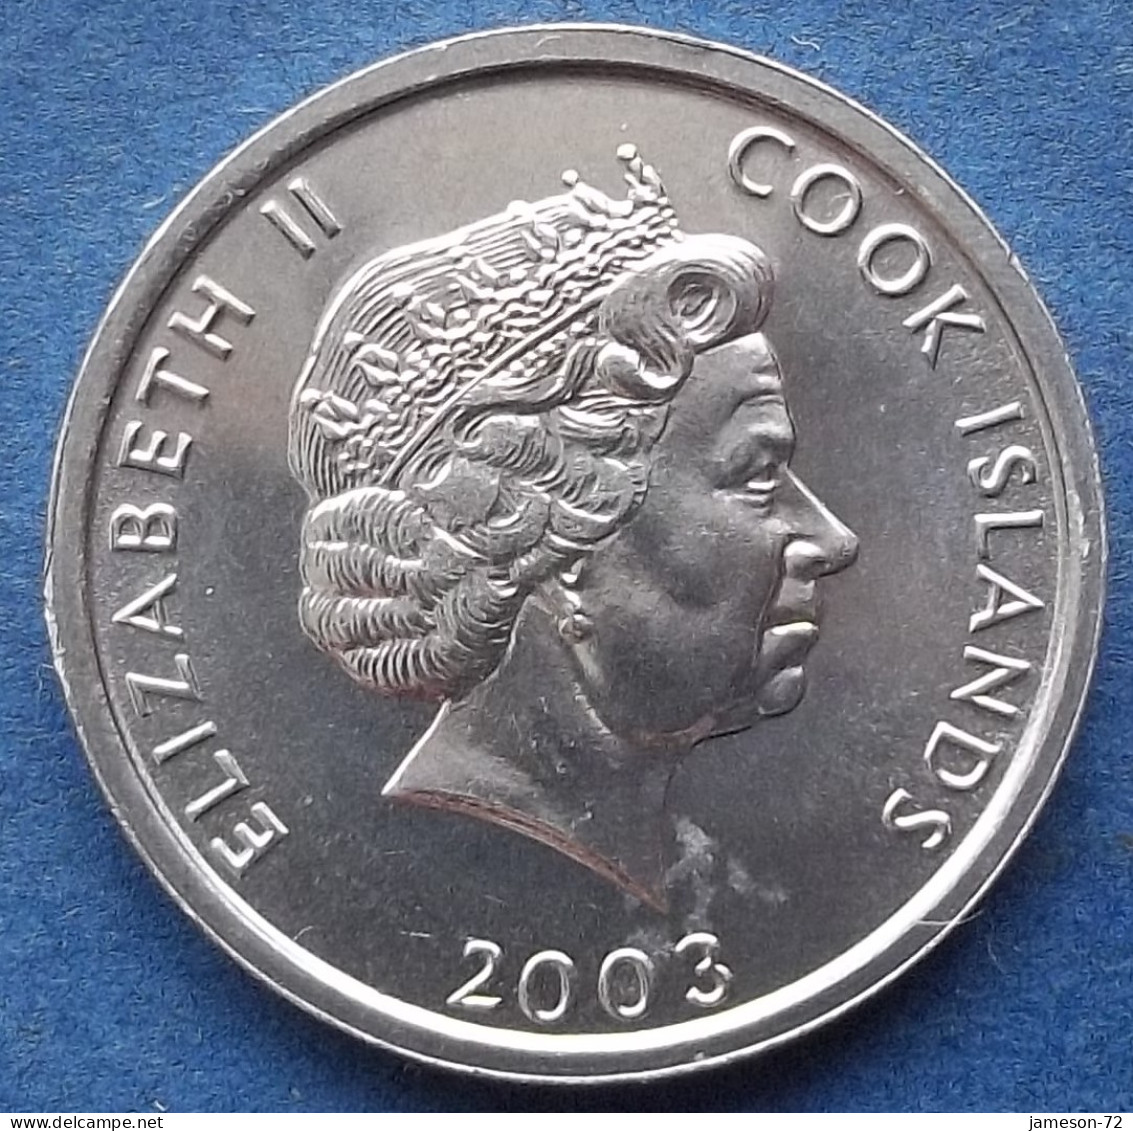 COOK ISLANDS - 1 Cent 2003 "Collie Dog" KM# 420 Dependency Of New Zealand Elizabeth II - Edelweiss Coins - Cook Islands